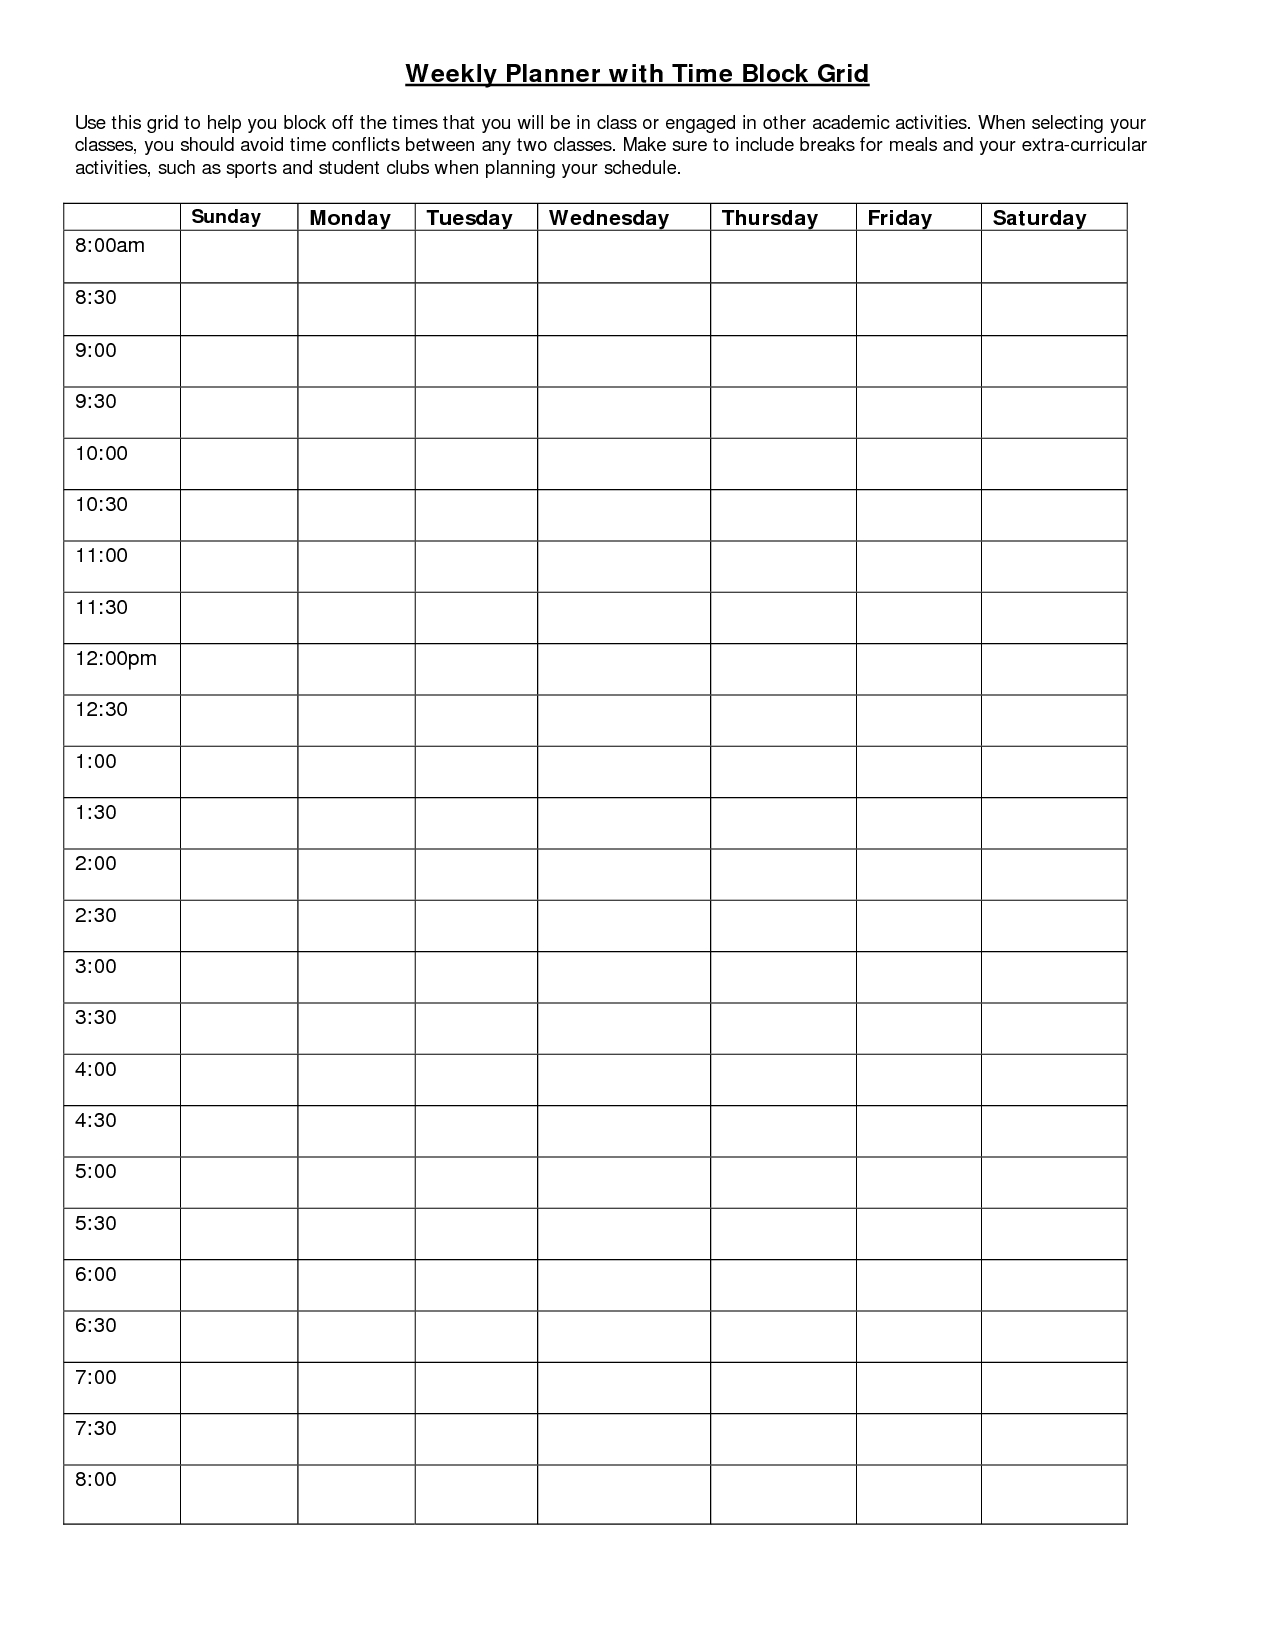 Weekly Planner With Time Block Grid | Weekly Planner